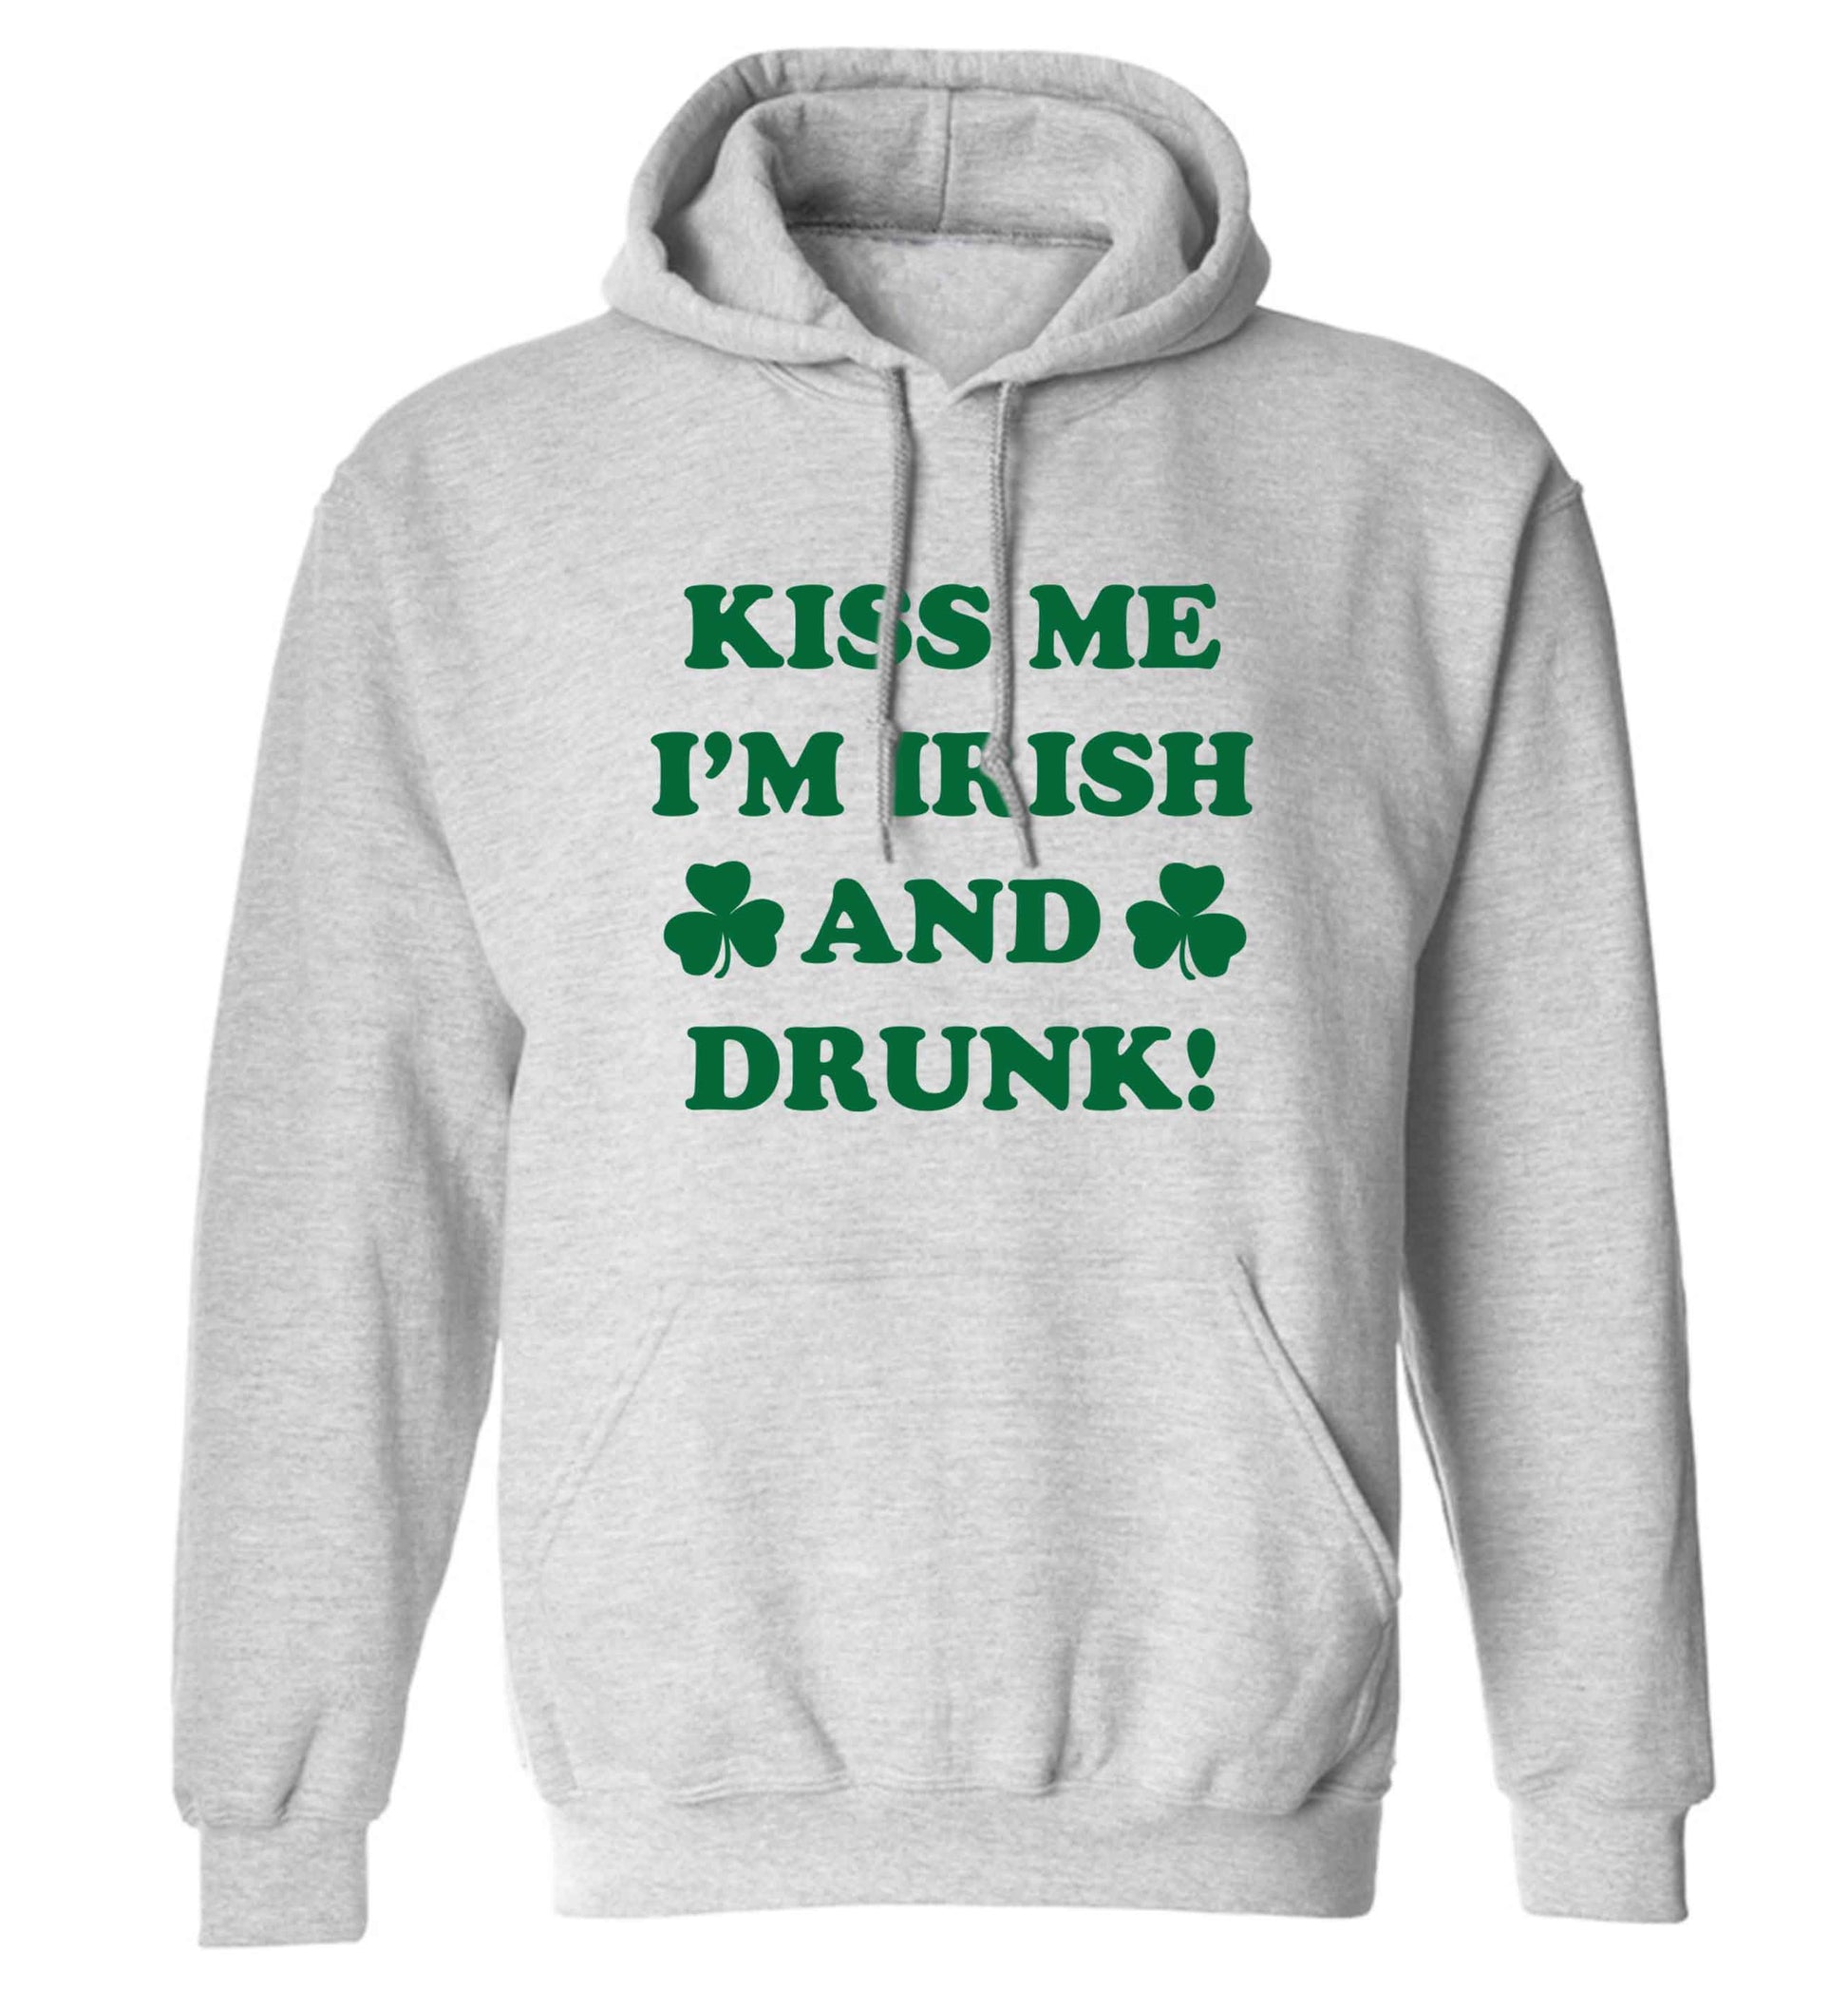 Kiss me I'm Irish and drunk adults unisex grey hoodie 2XL